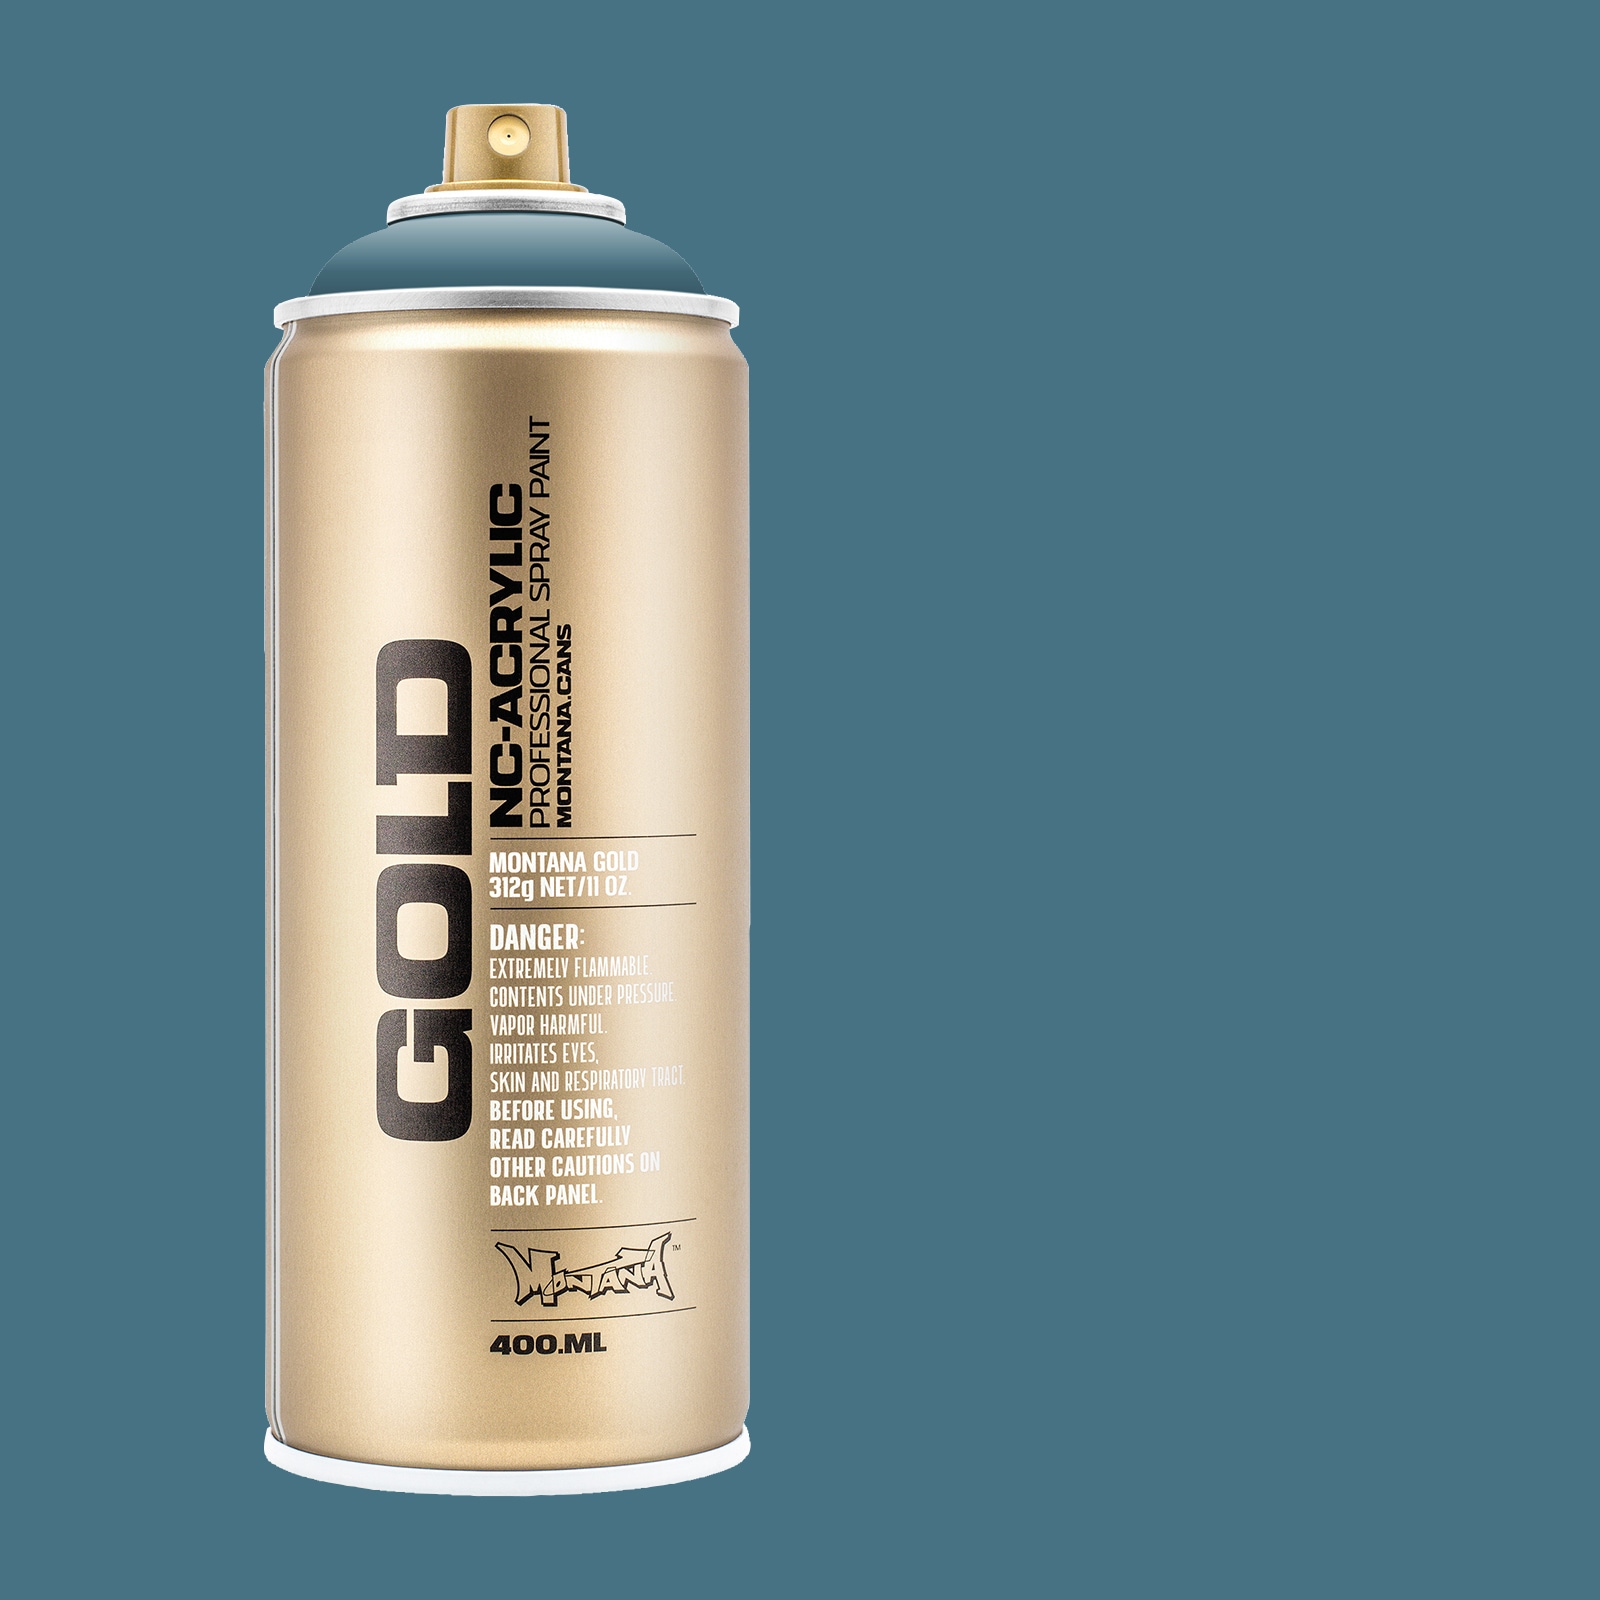 Power spray adhesive Plus - 400 ml, Glue + Seal, Caravan Repairs,  Motorhome Repairs, Camper Van Repairs, Spare Parts